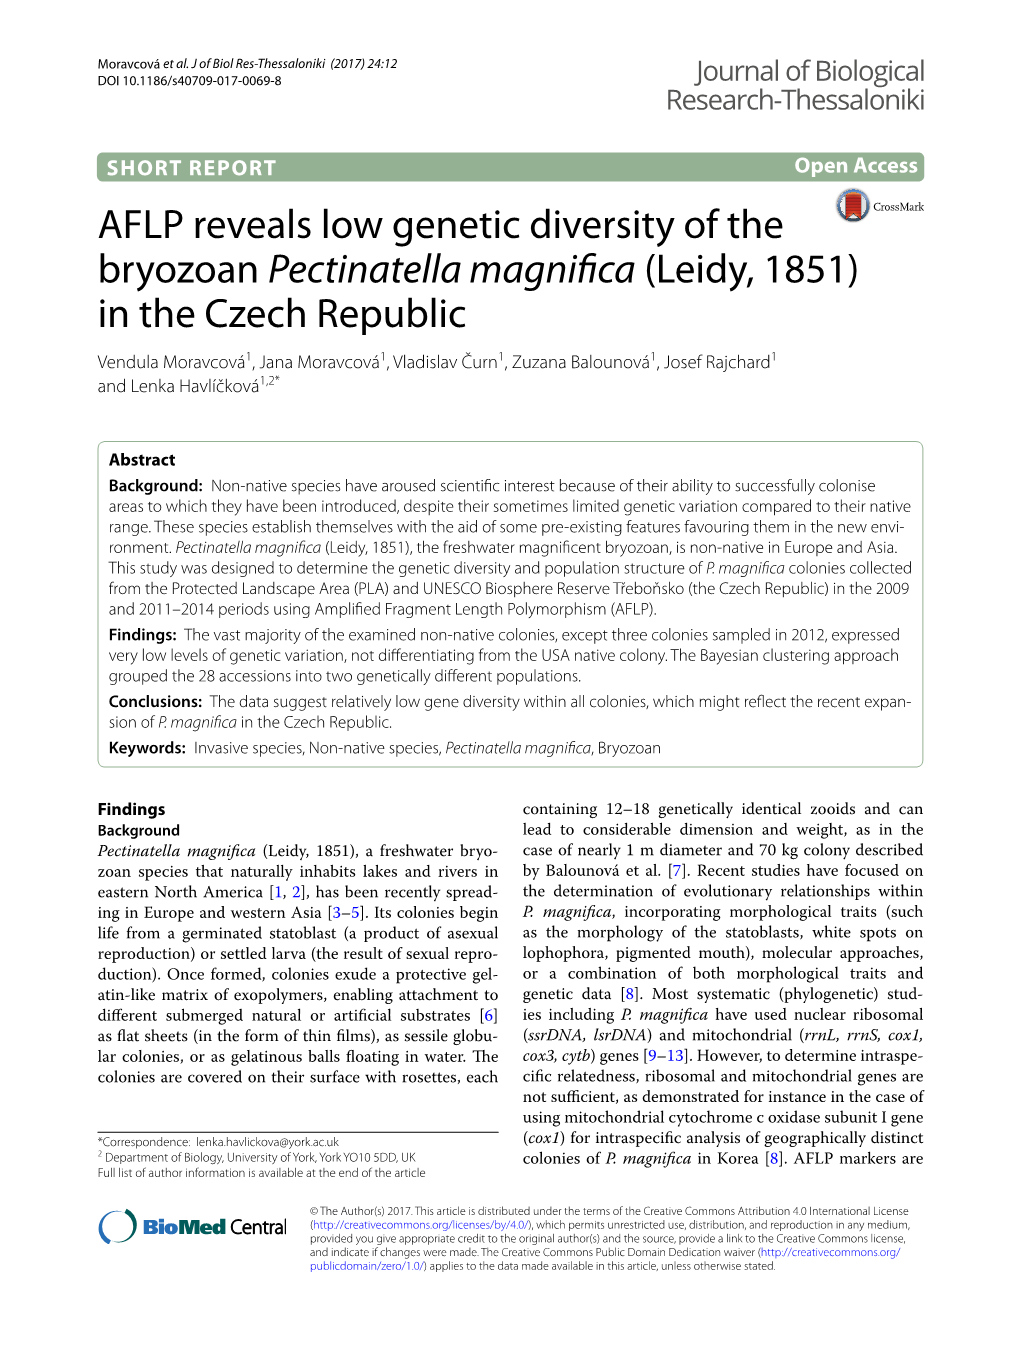 AFLP Reveals Low Genetic Diversity of the Bryozoan Pectinatella Magnifica